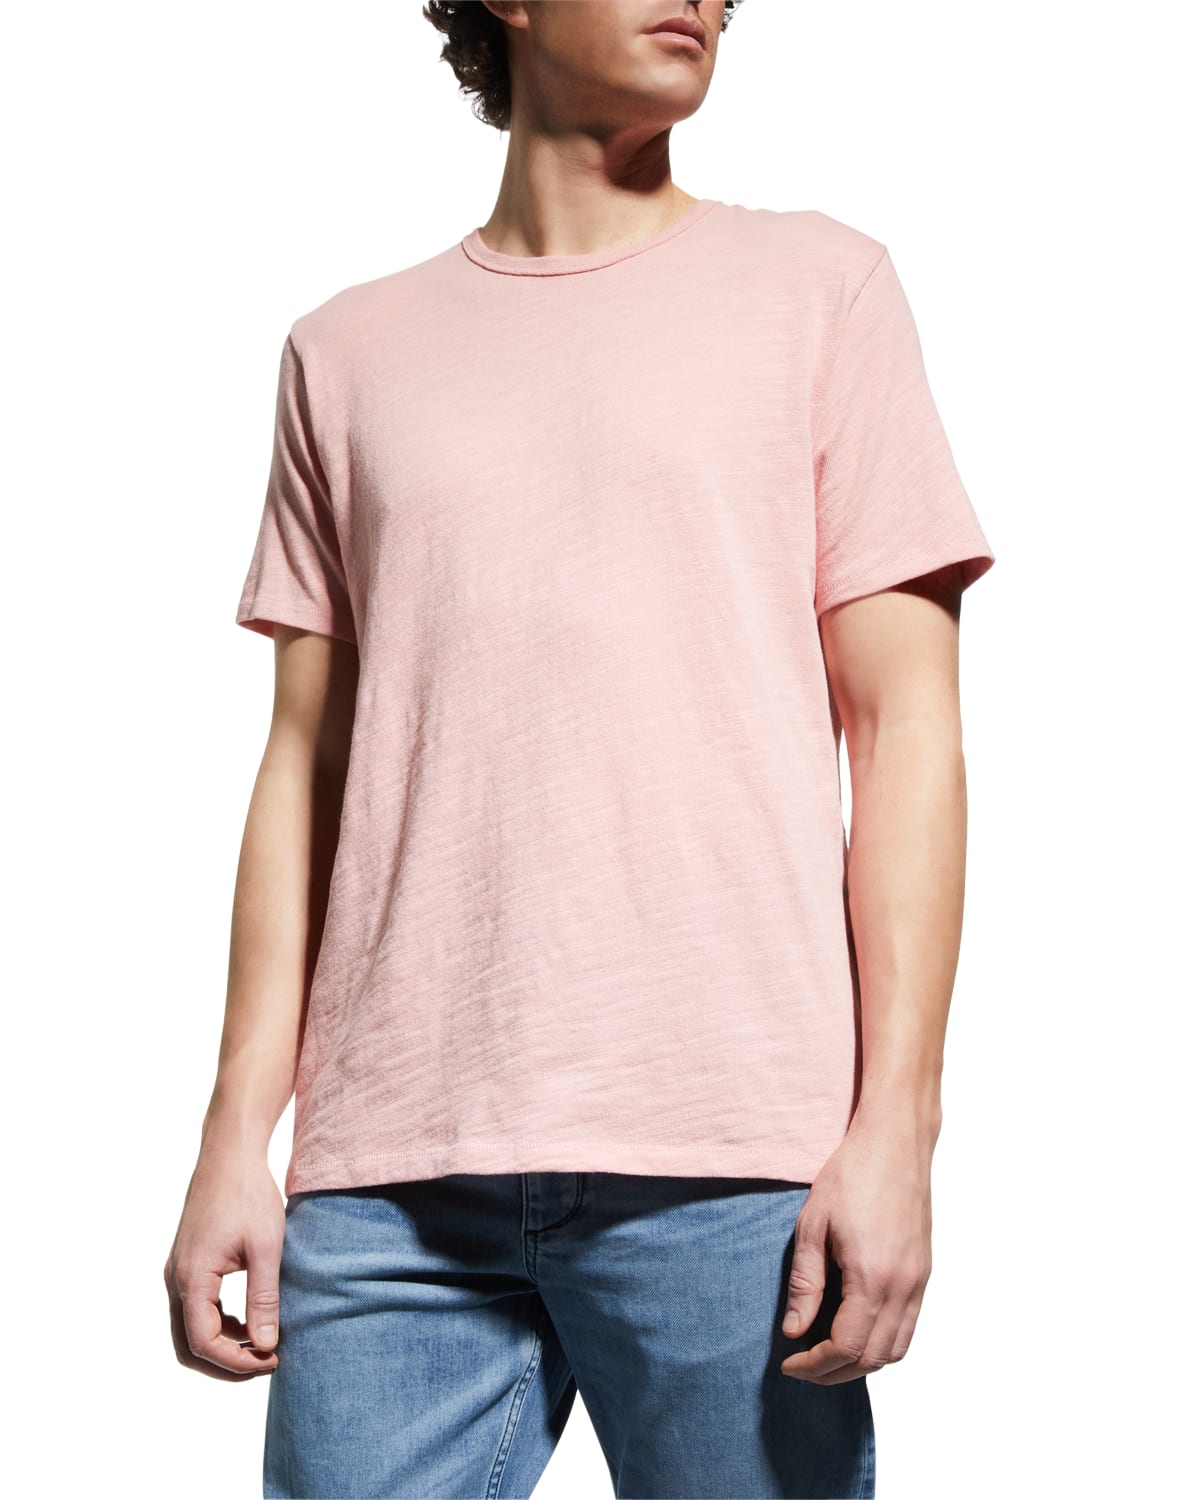 YUNY Mens Relaxed-Fit Pocket Plus Velvet Solid Sweatshirt Top Khaki XL 